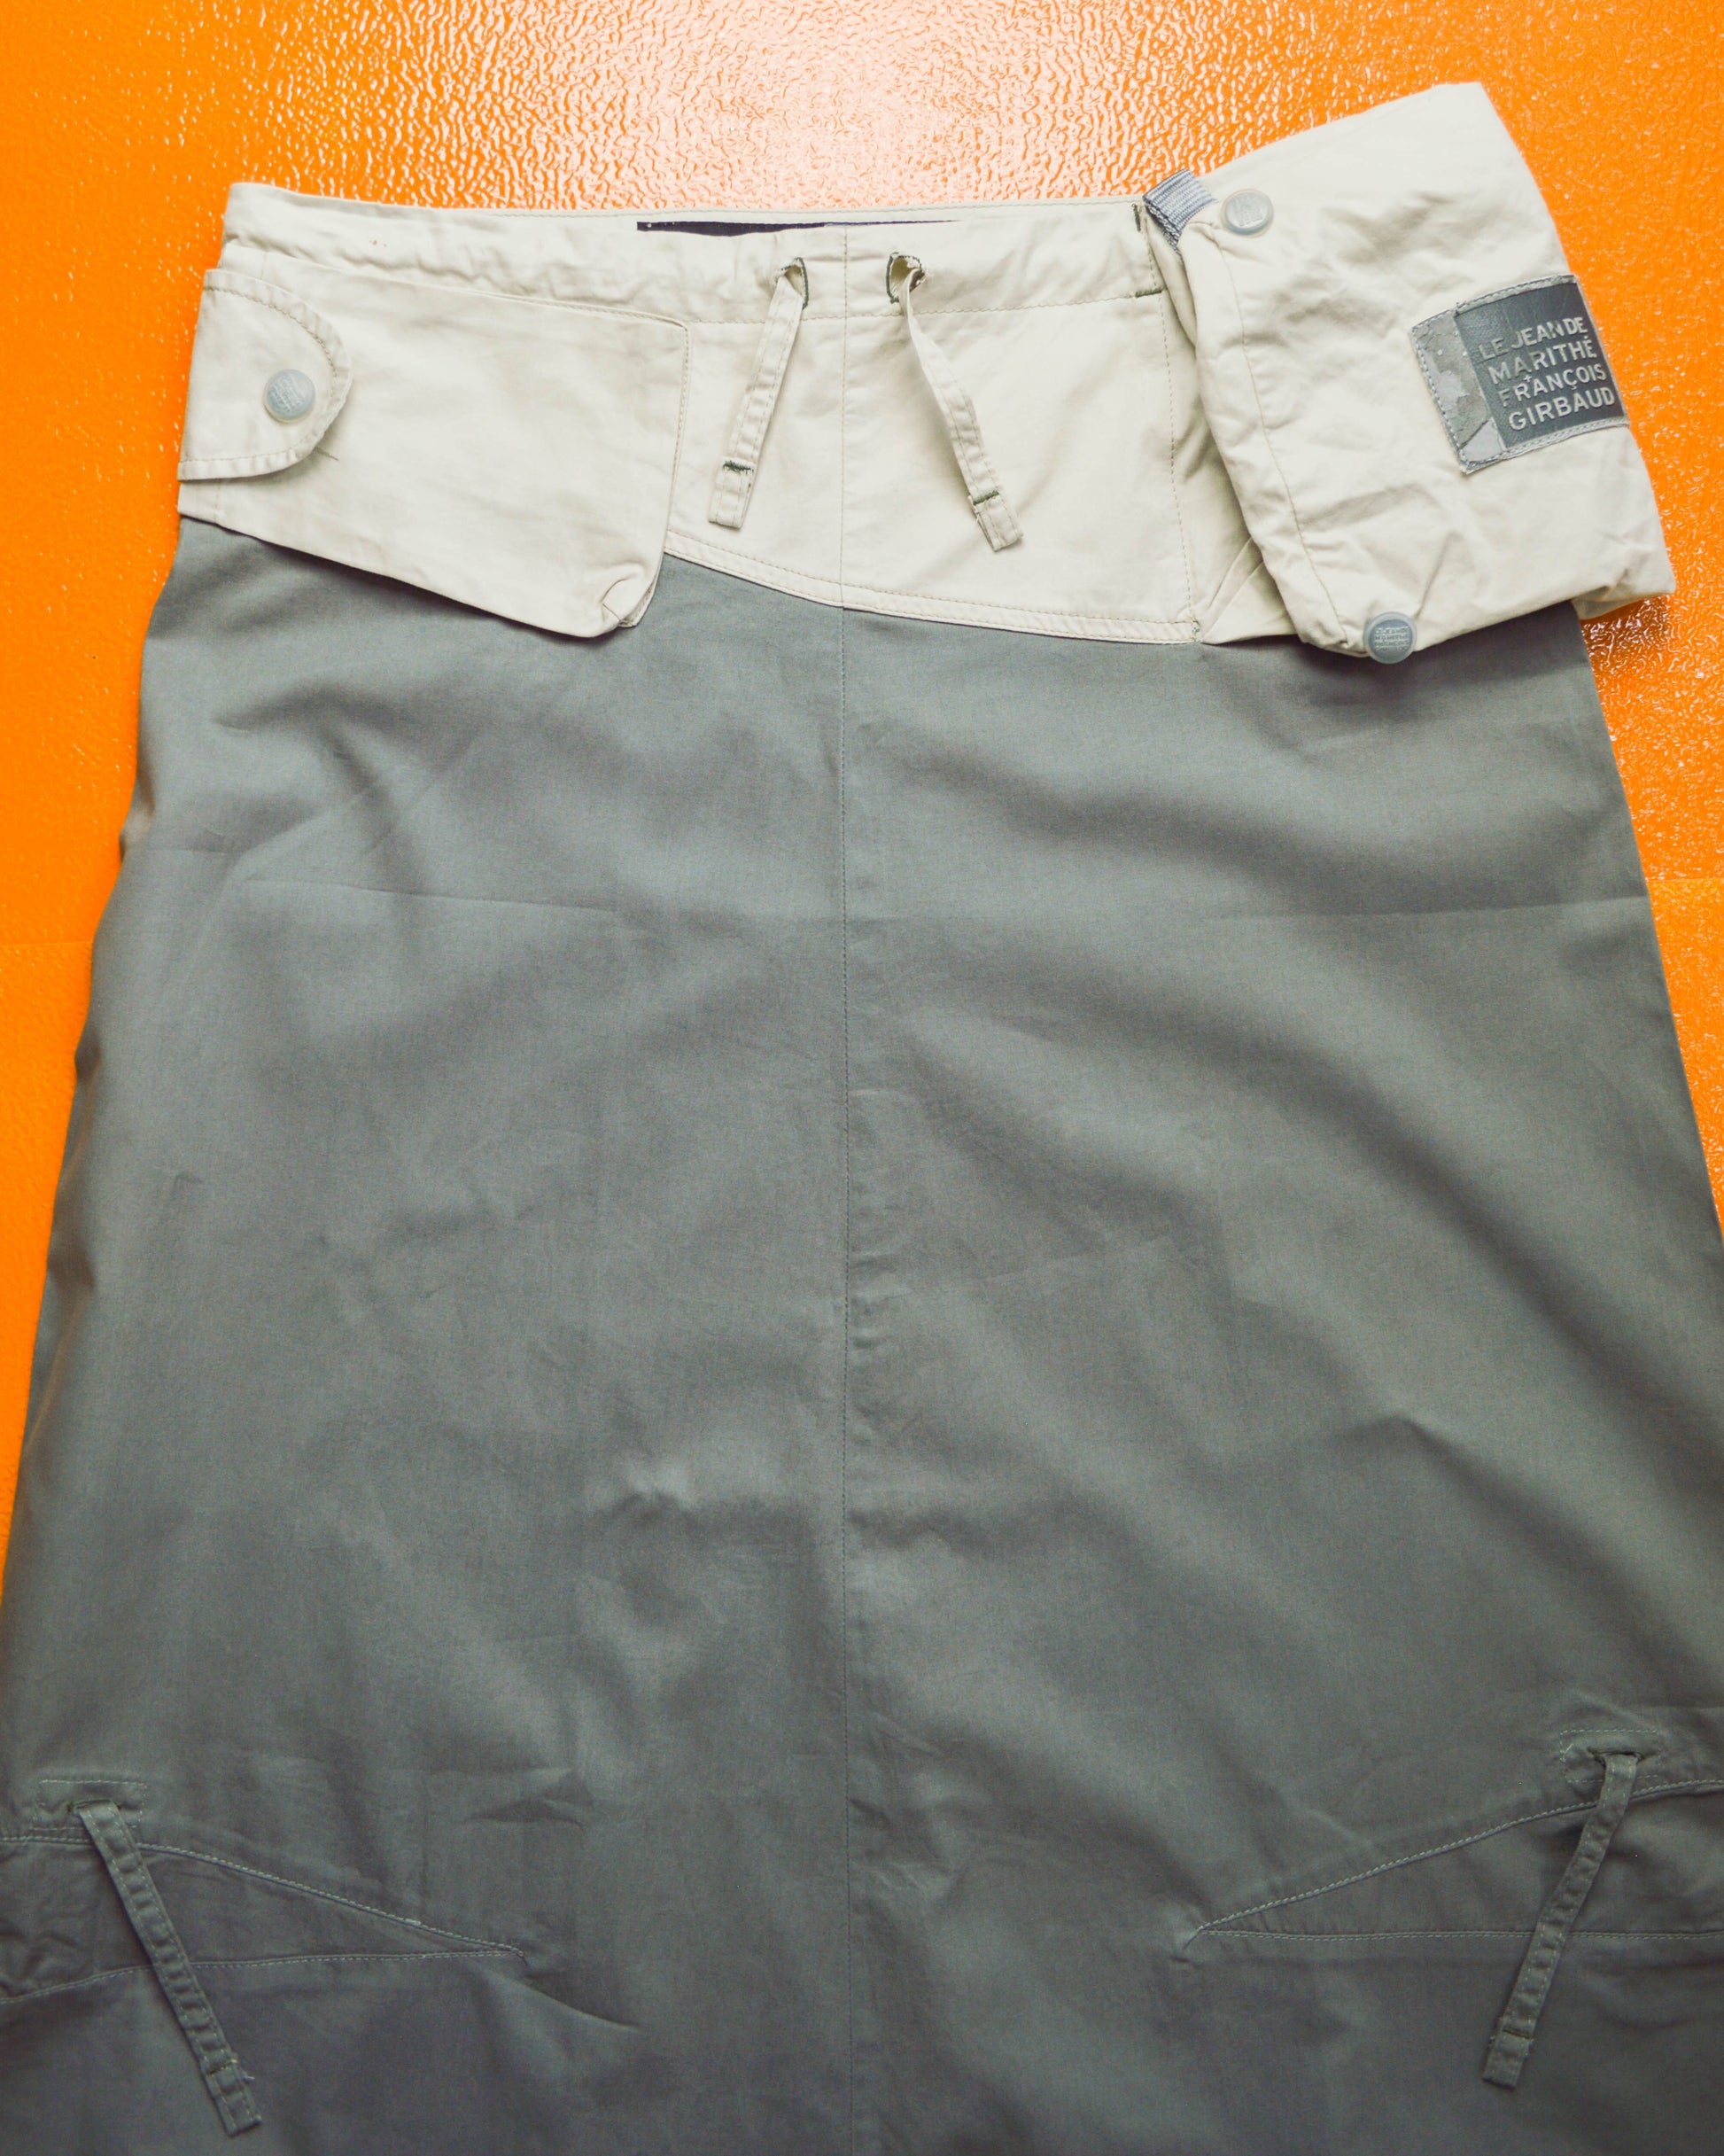 Marithe Francois Girbaud Early 2000s Cargo Pocket Two Tone Skirt (42)